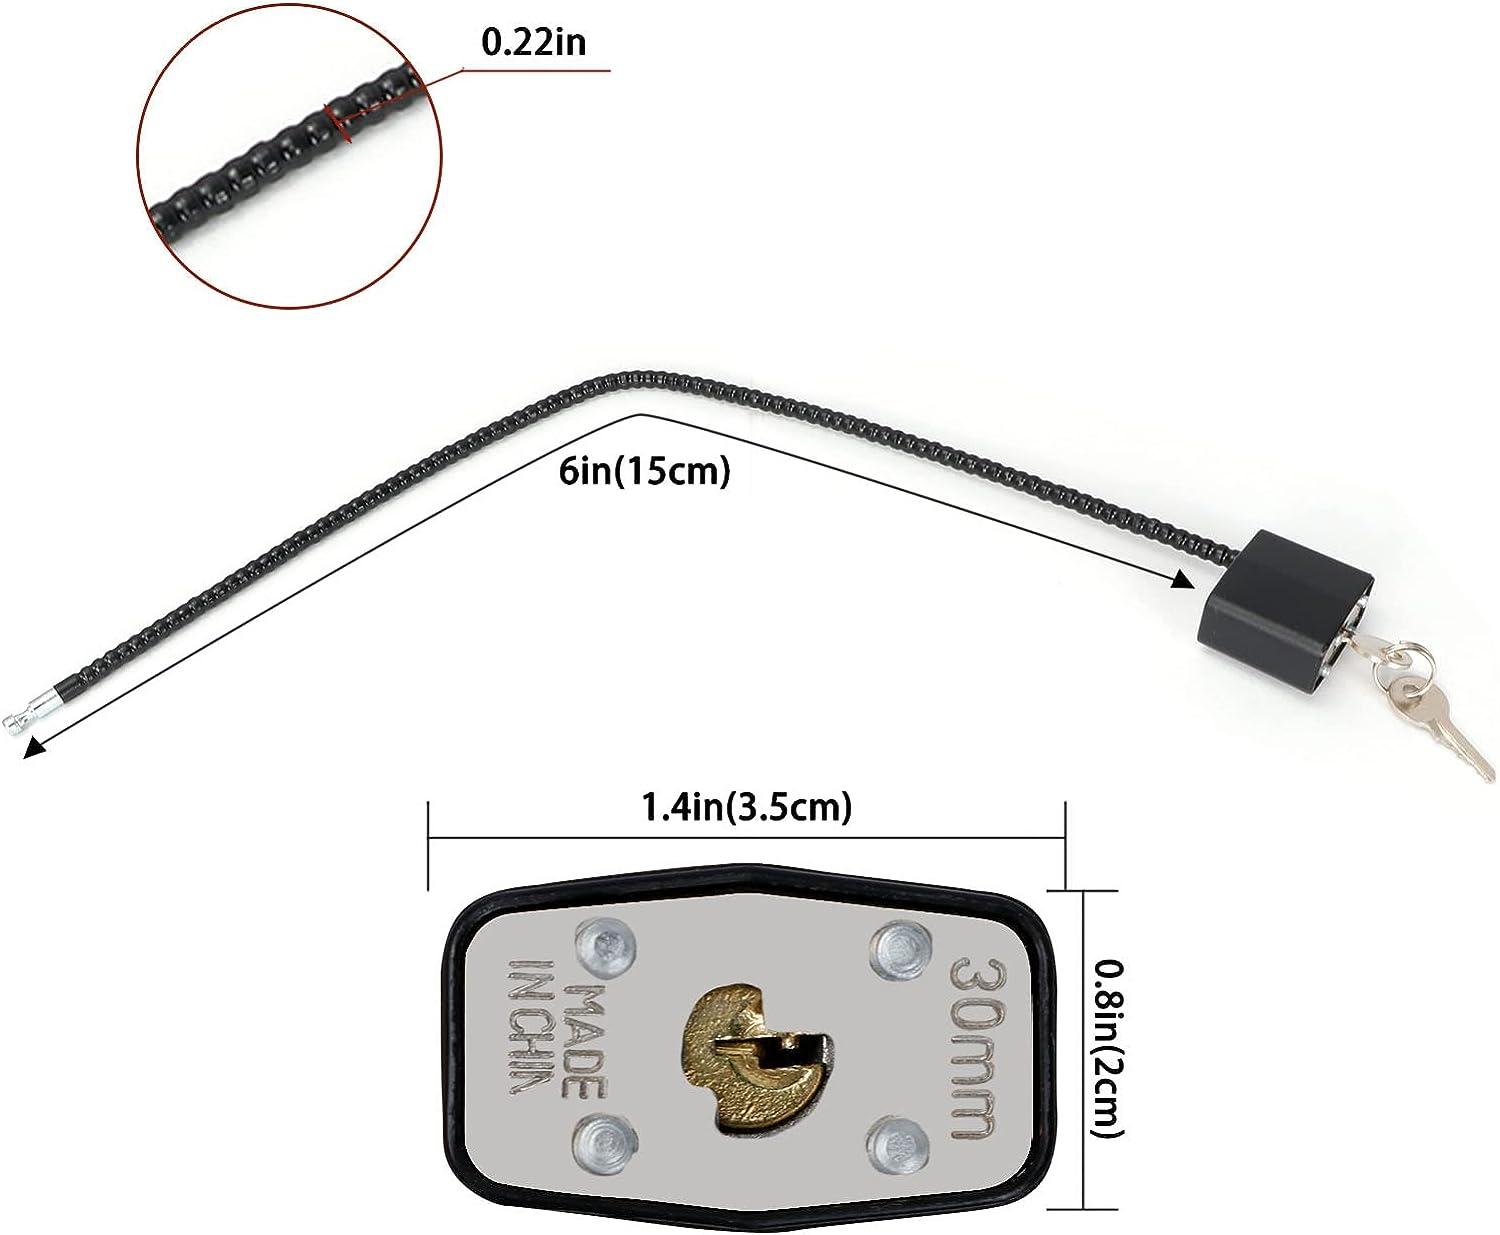  INNOVATEX 15-inch Gun Lock Cable Wire Locks with Keys